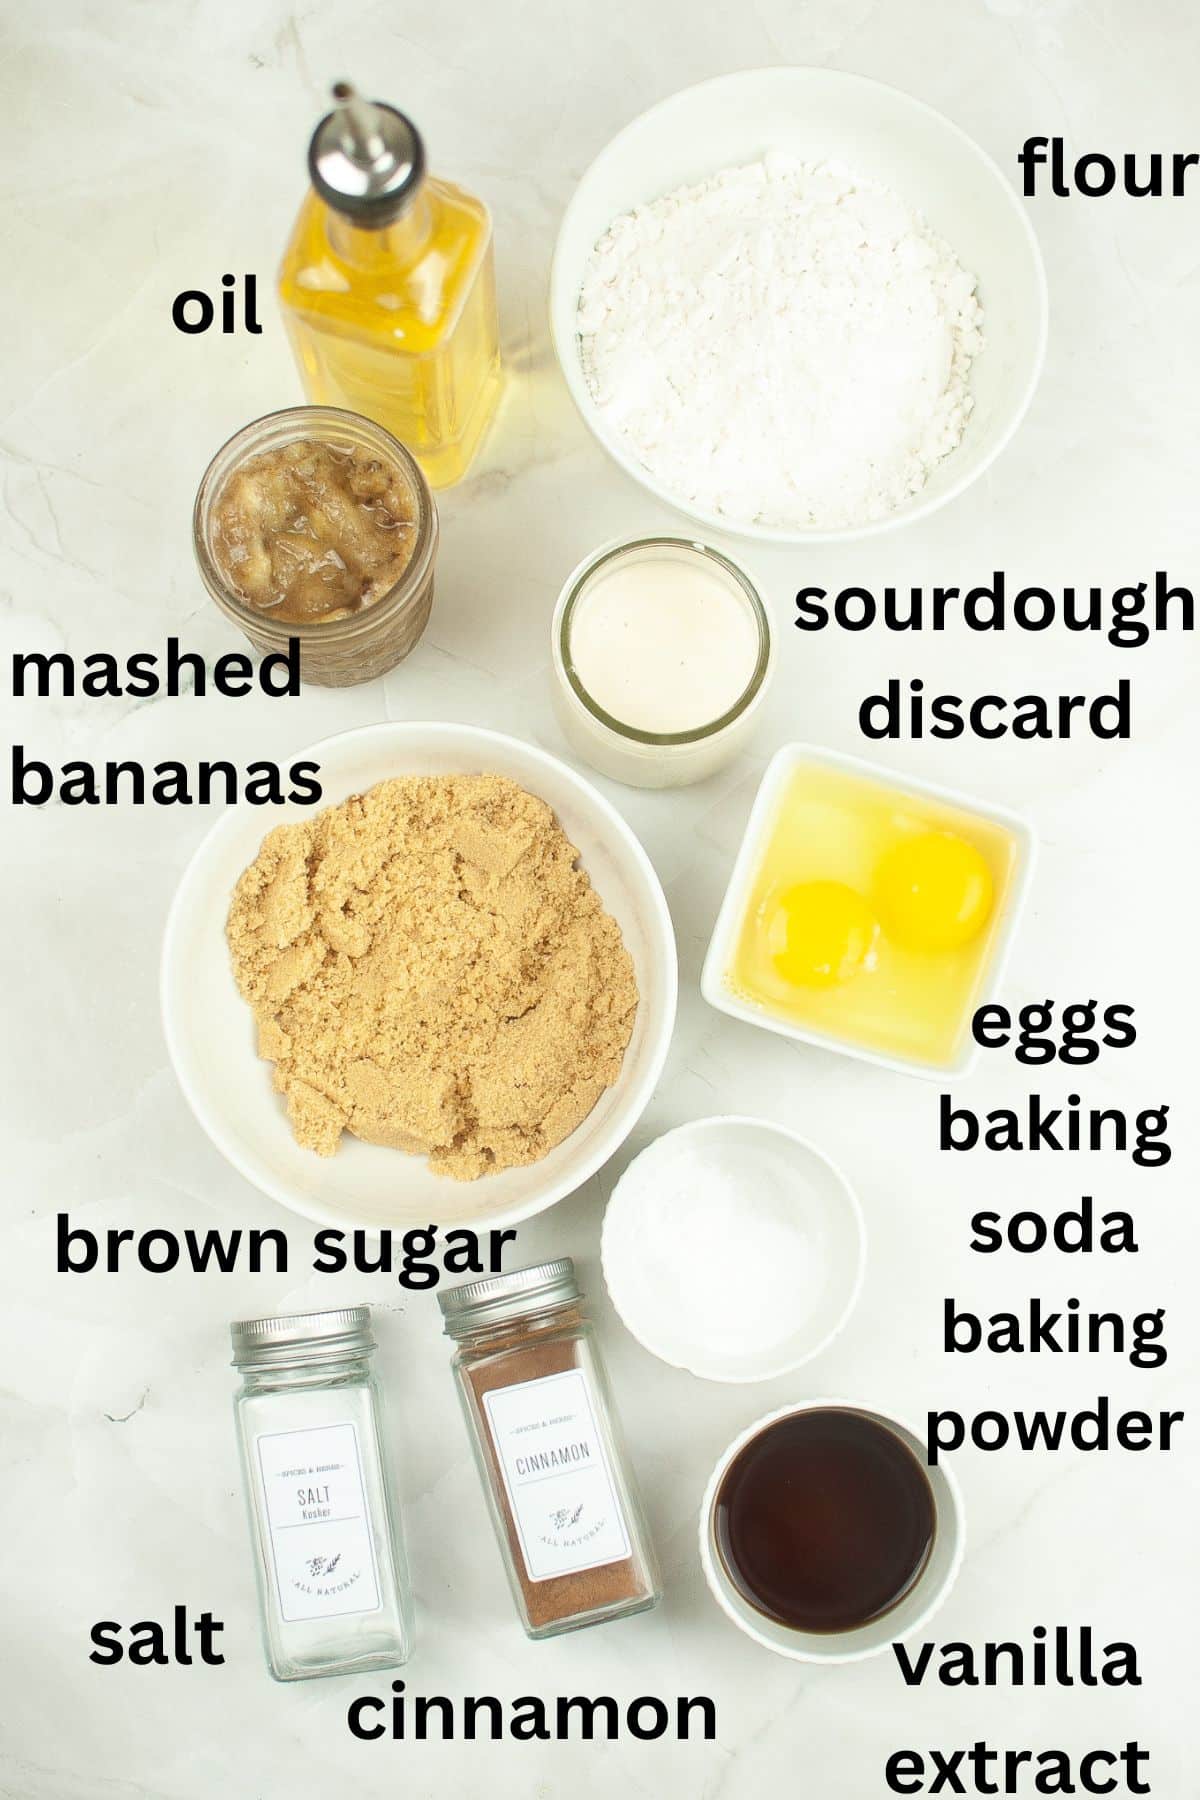 oil, flour, mashed bananas, sourdough discard, brown sugar, salt, cinnamon, vanilla extract, eggs, baking soda, baking powder